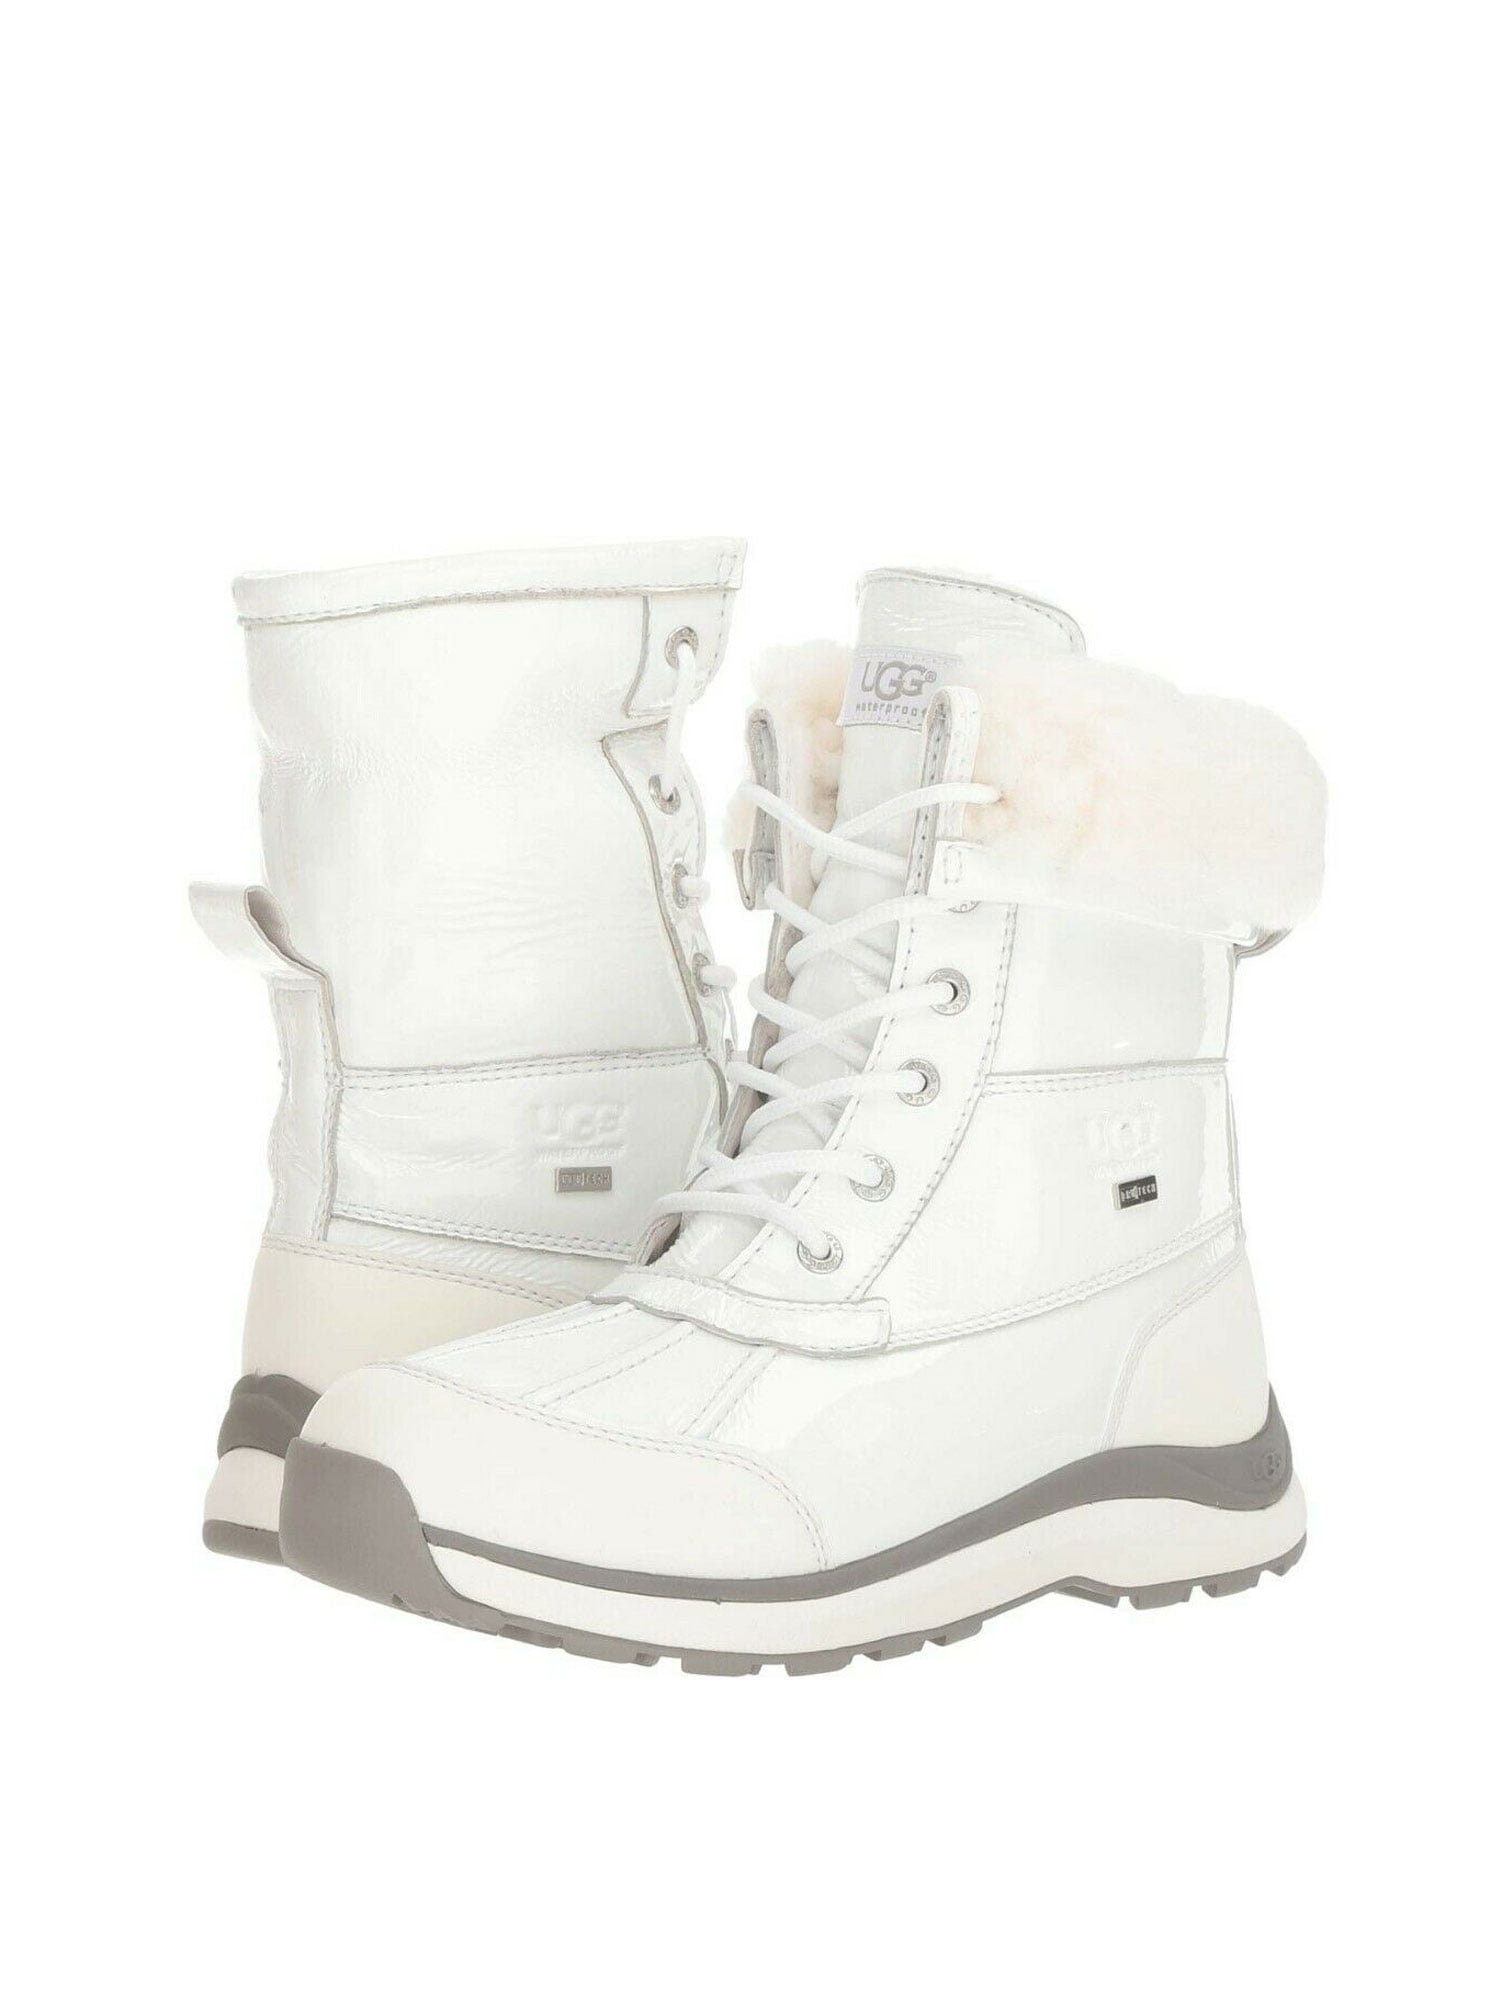 ugg winter boots adirondack